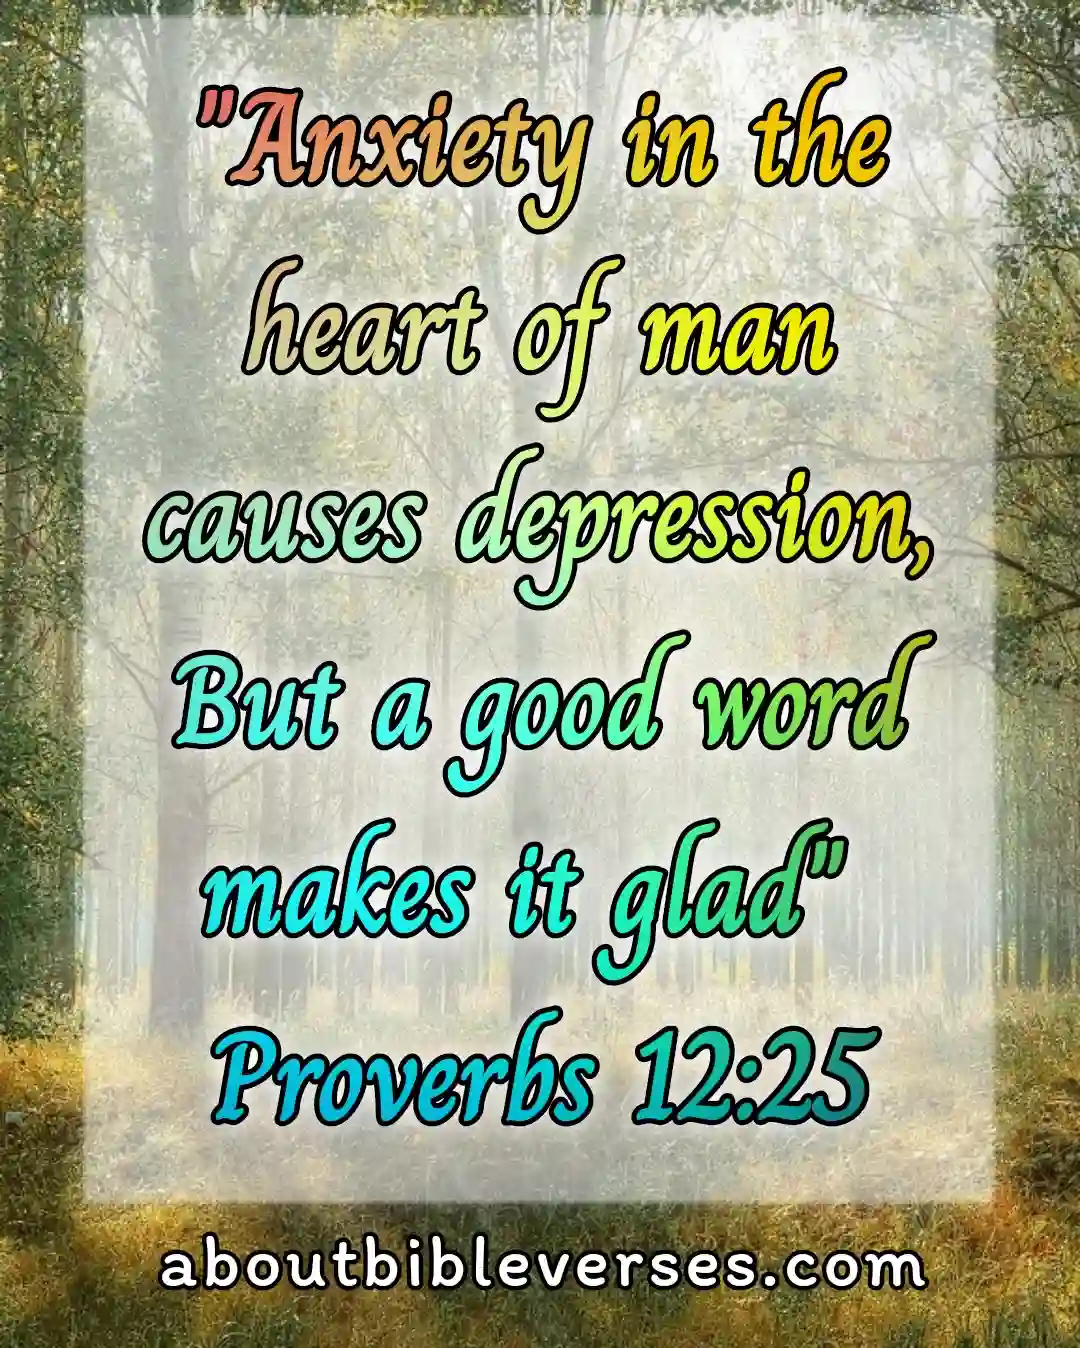 Today bible verse (Proverbs 12:25)